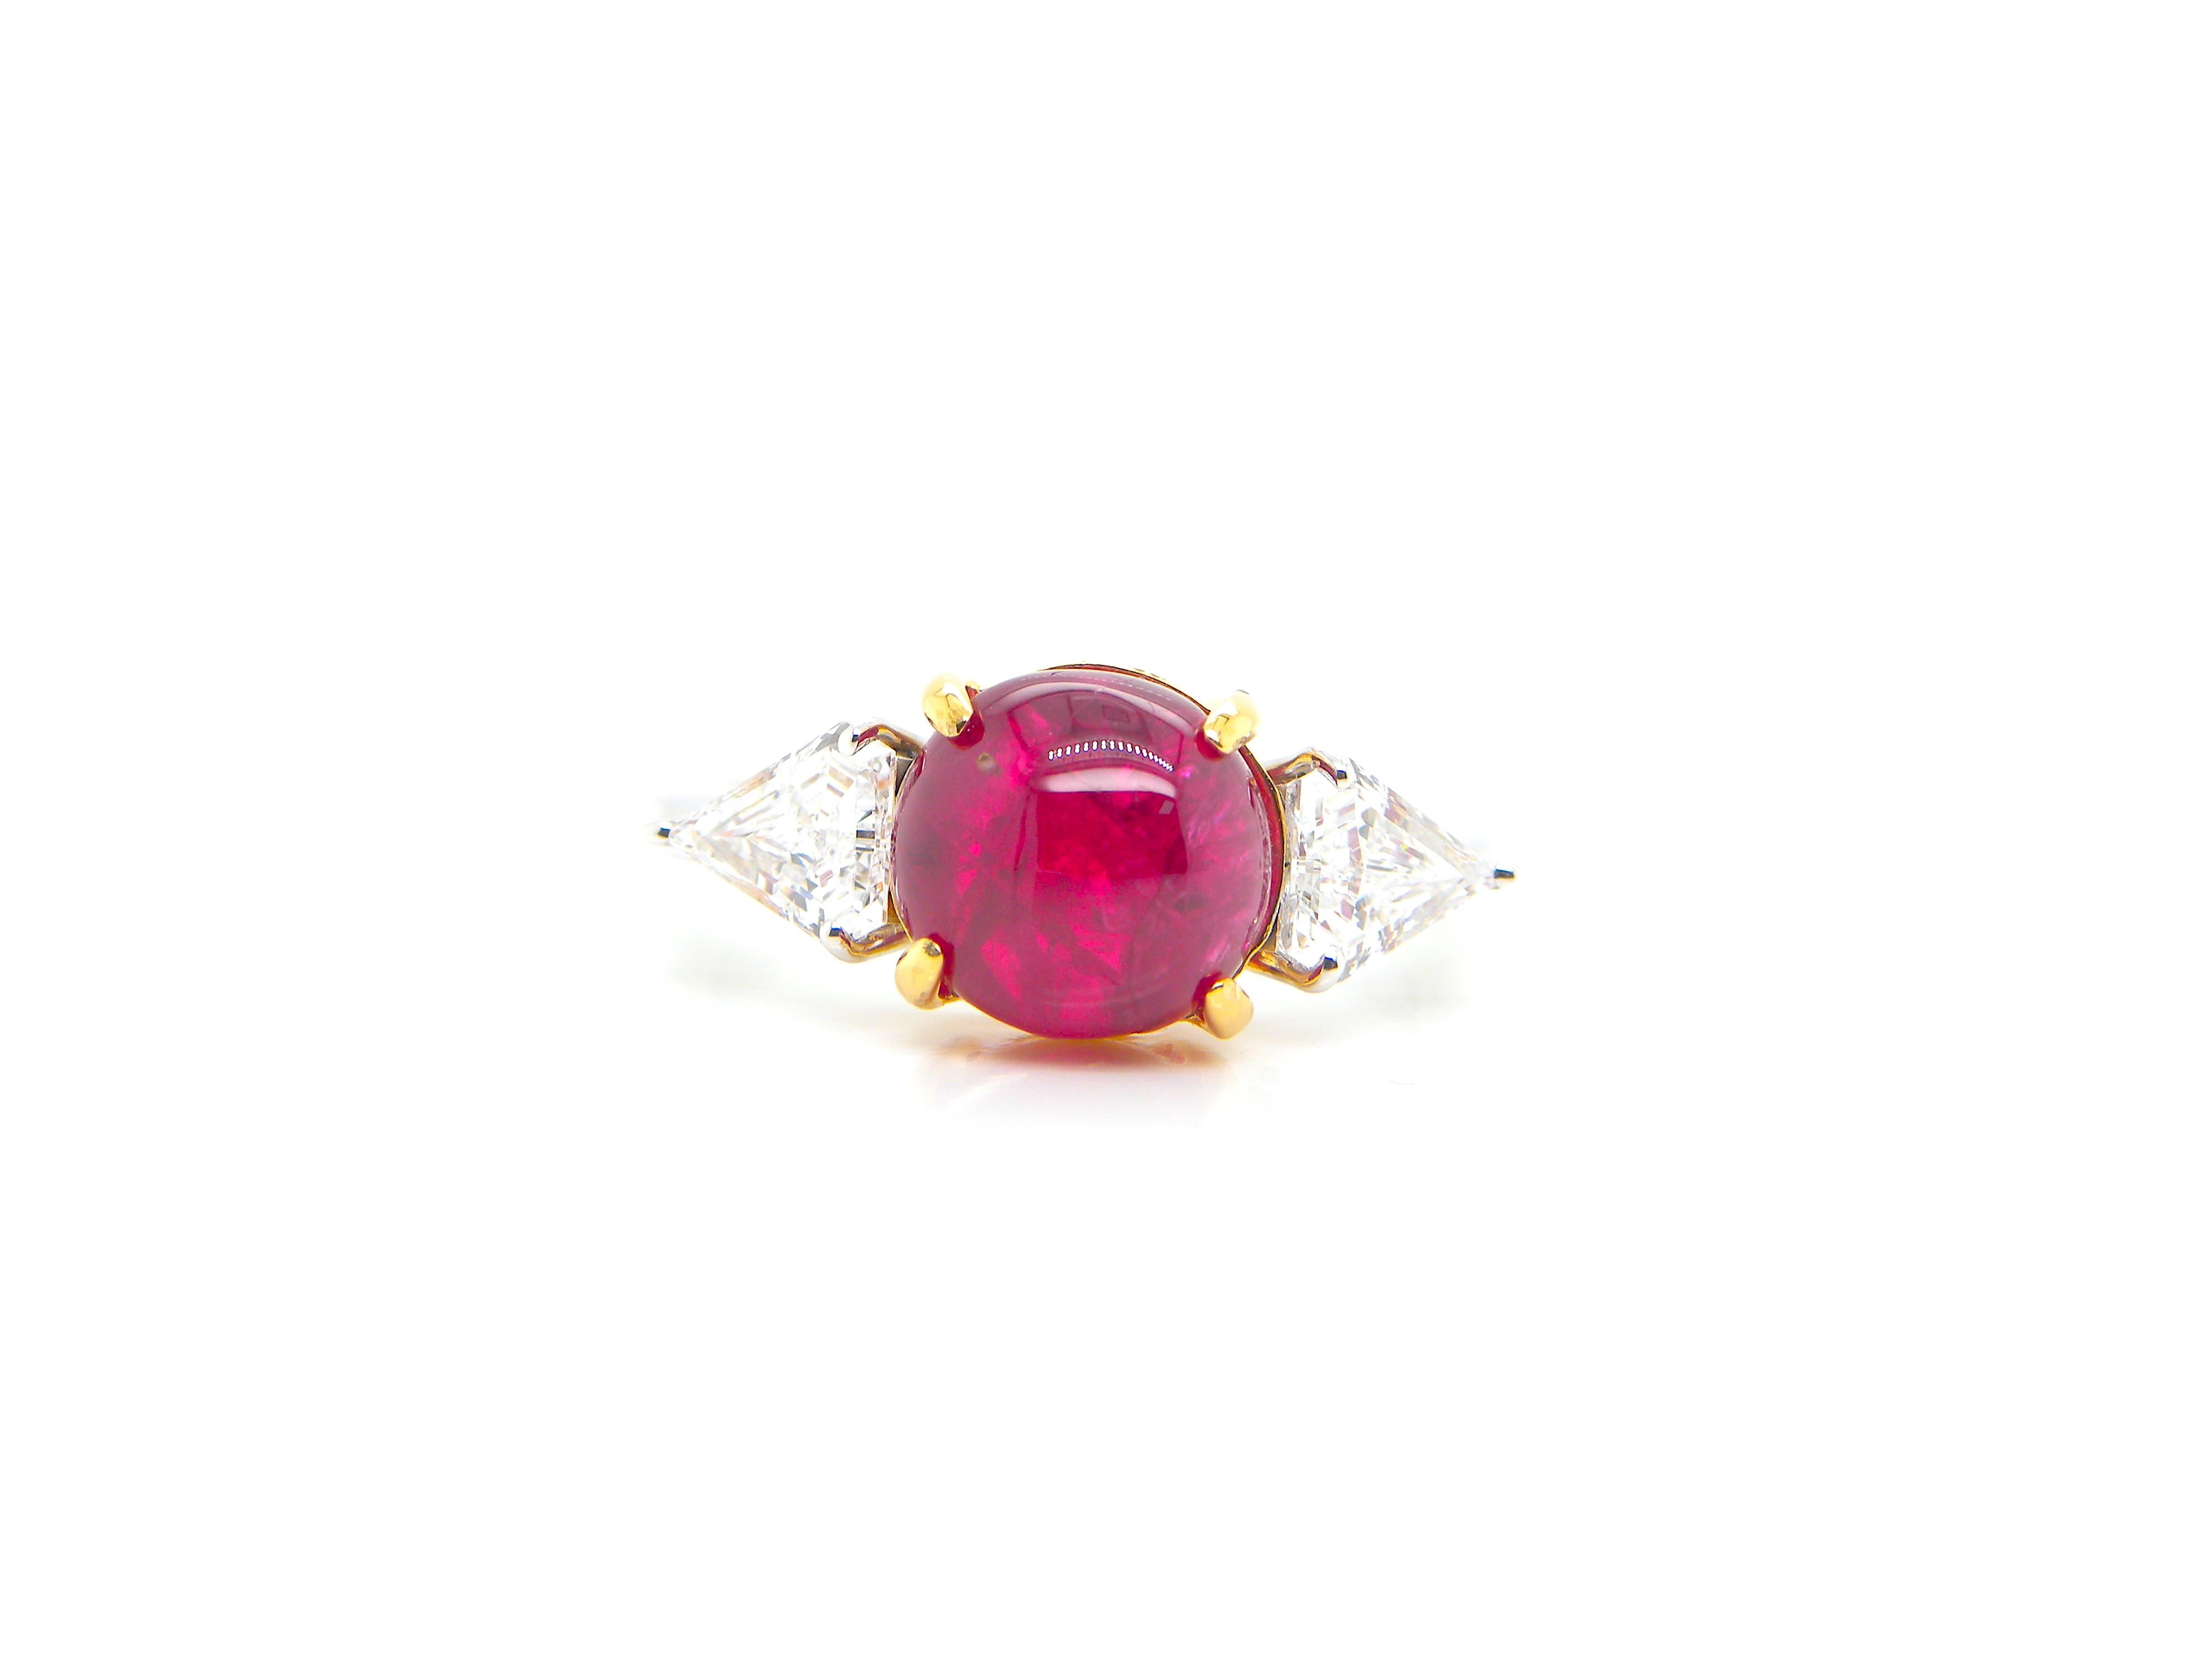 4.81 Carat GIA Certified Burma No Heat Vivid Red Ruby Cabochon and Diamond Ring:

A rare jewel, it features a 4.81 carat GIA certified Burma 